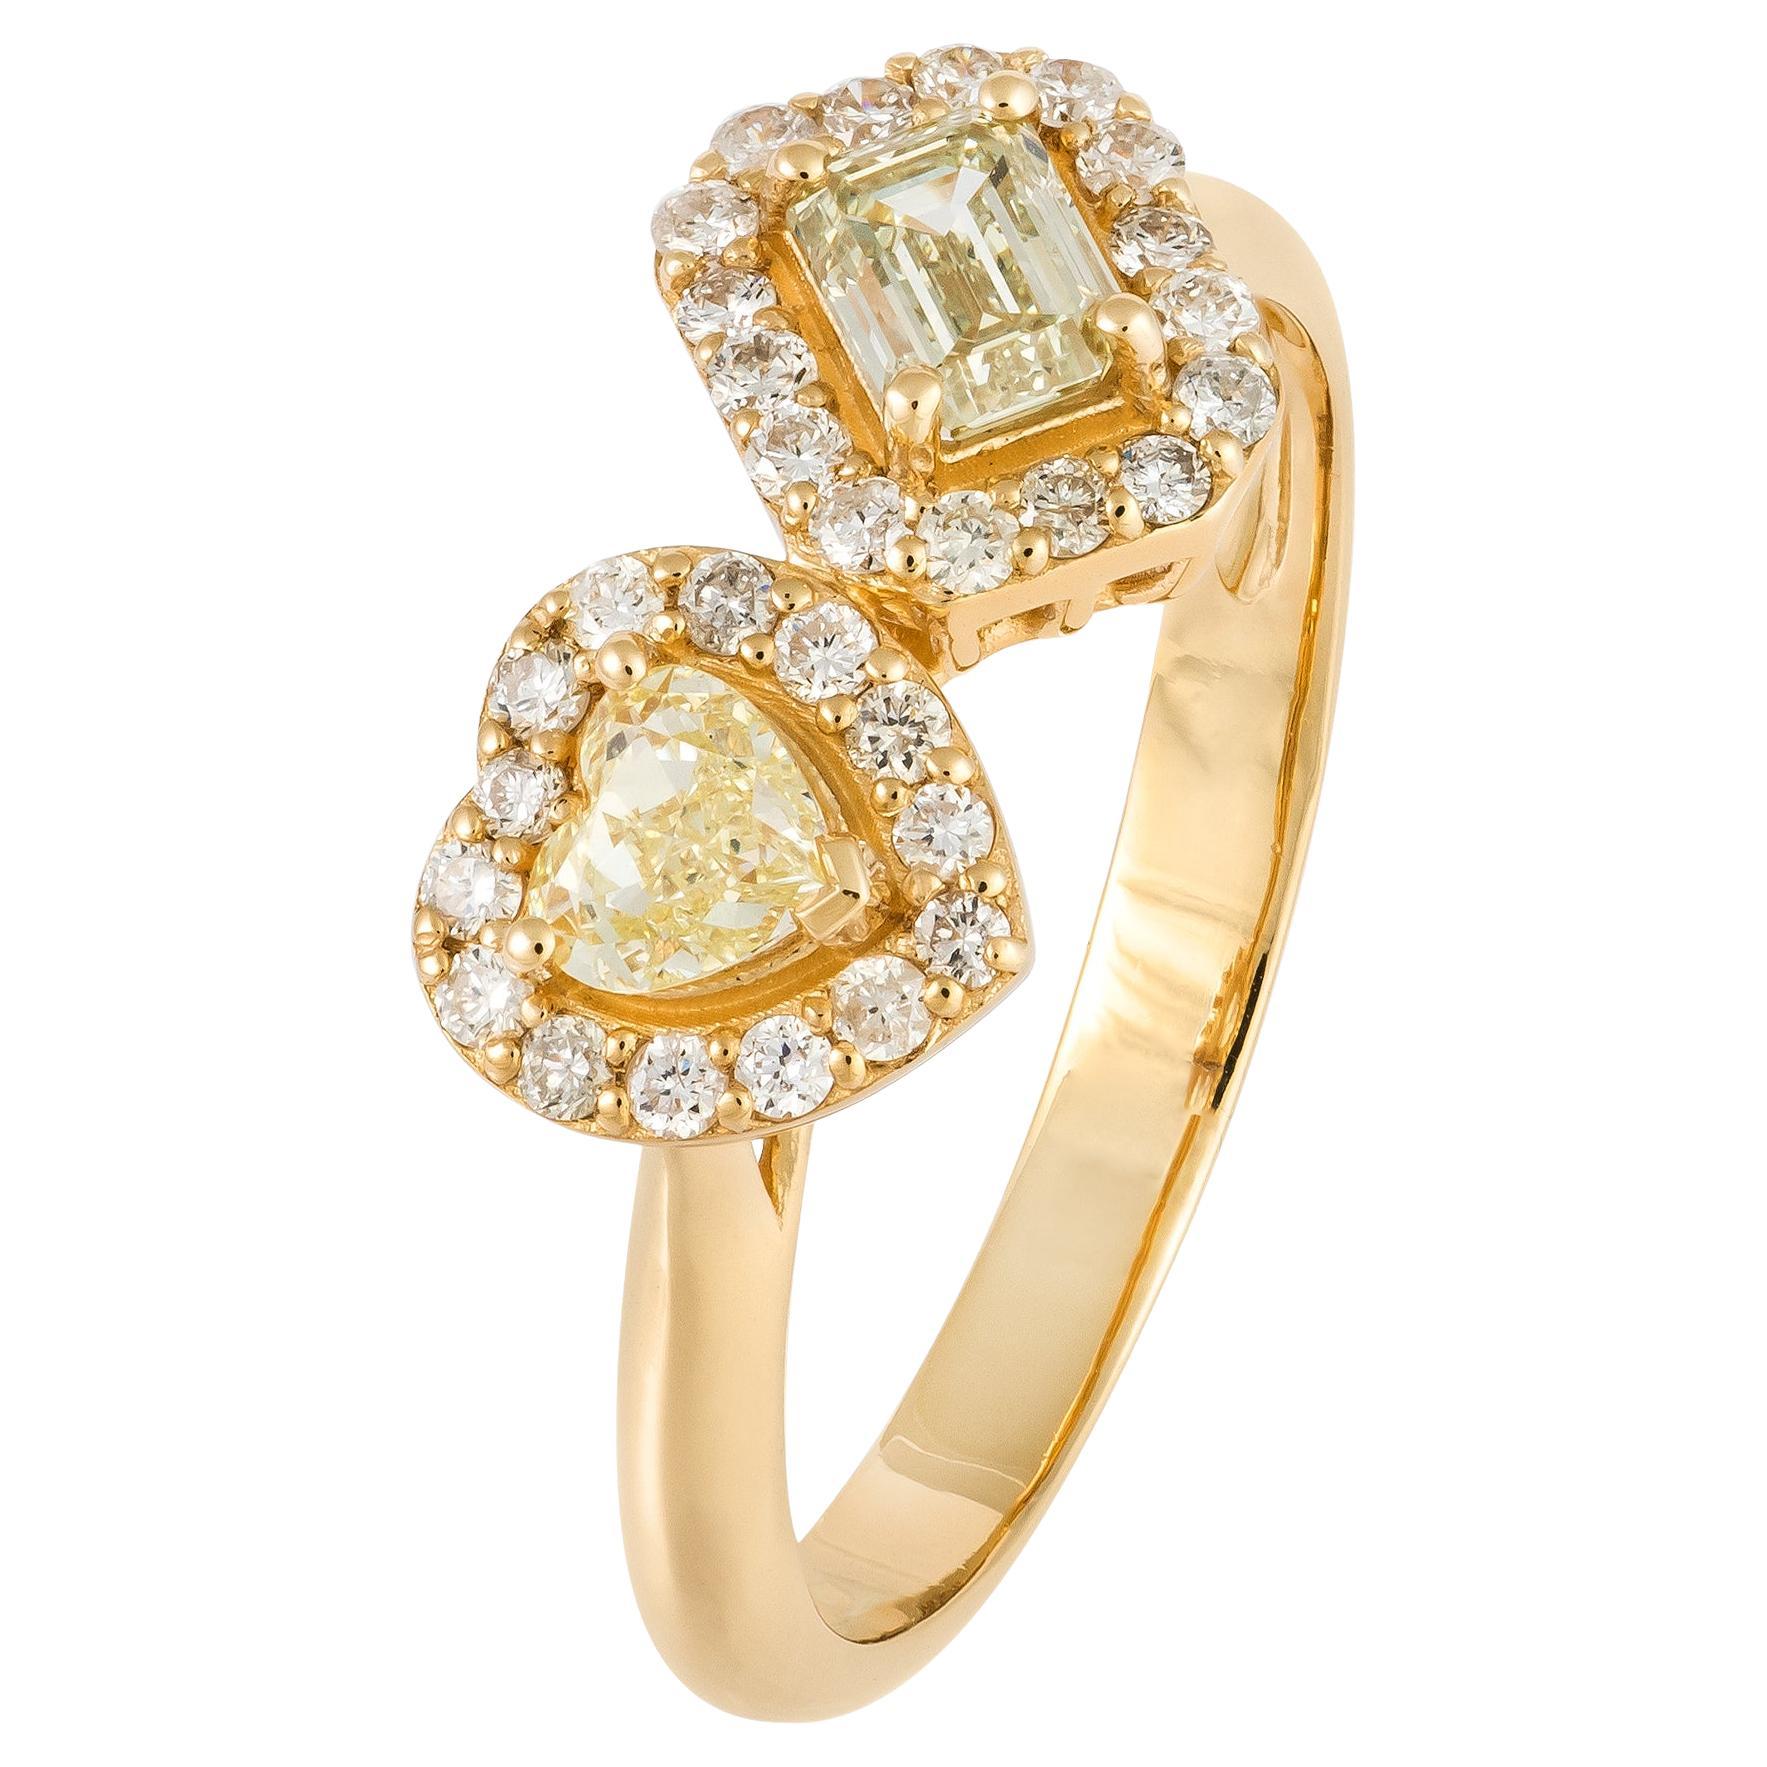 Impressive Yellow 18K Gold White Yellow Diamond Ring For Her